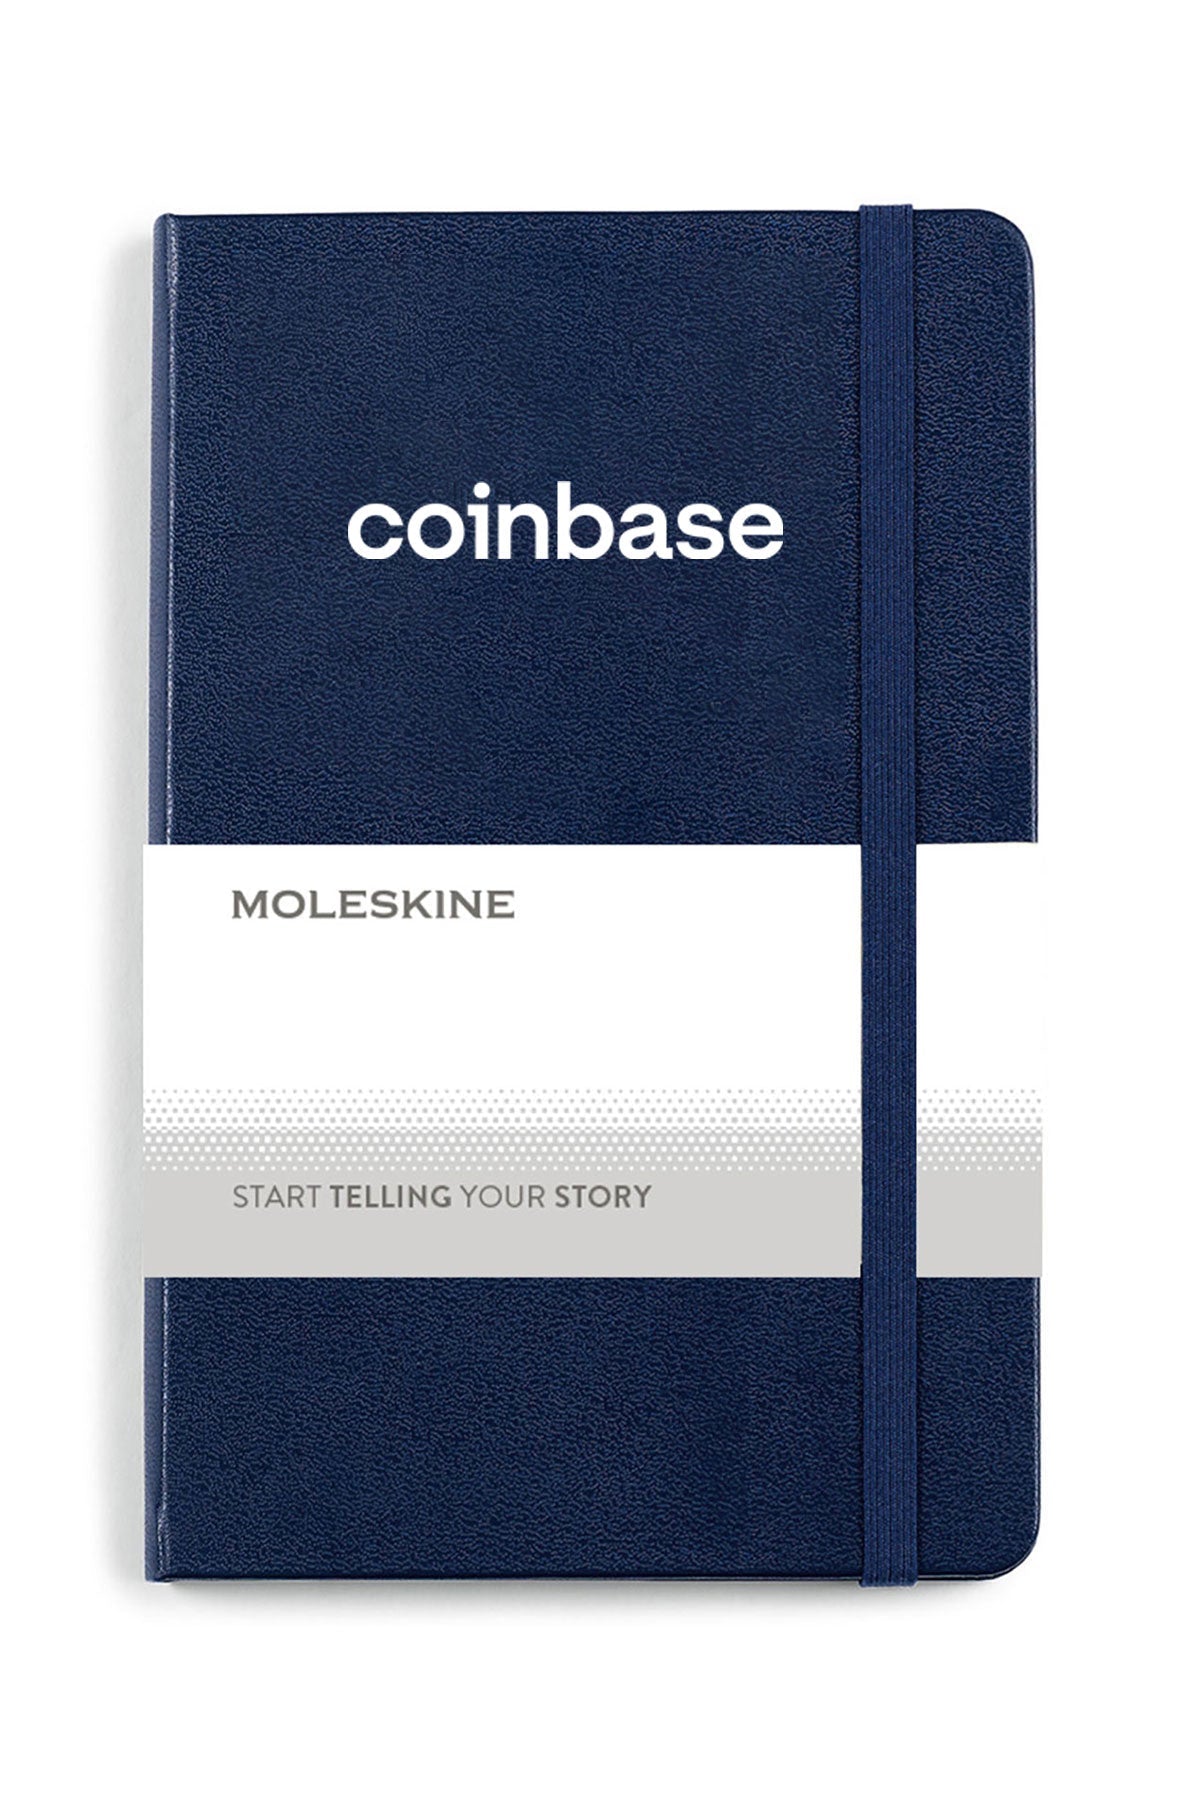 Moleskine Hard Cover Ruled Medium Notebook Navy Blue [Coinbase]